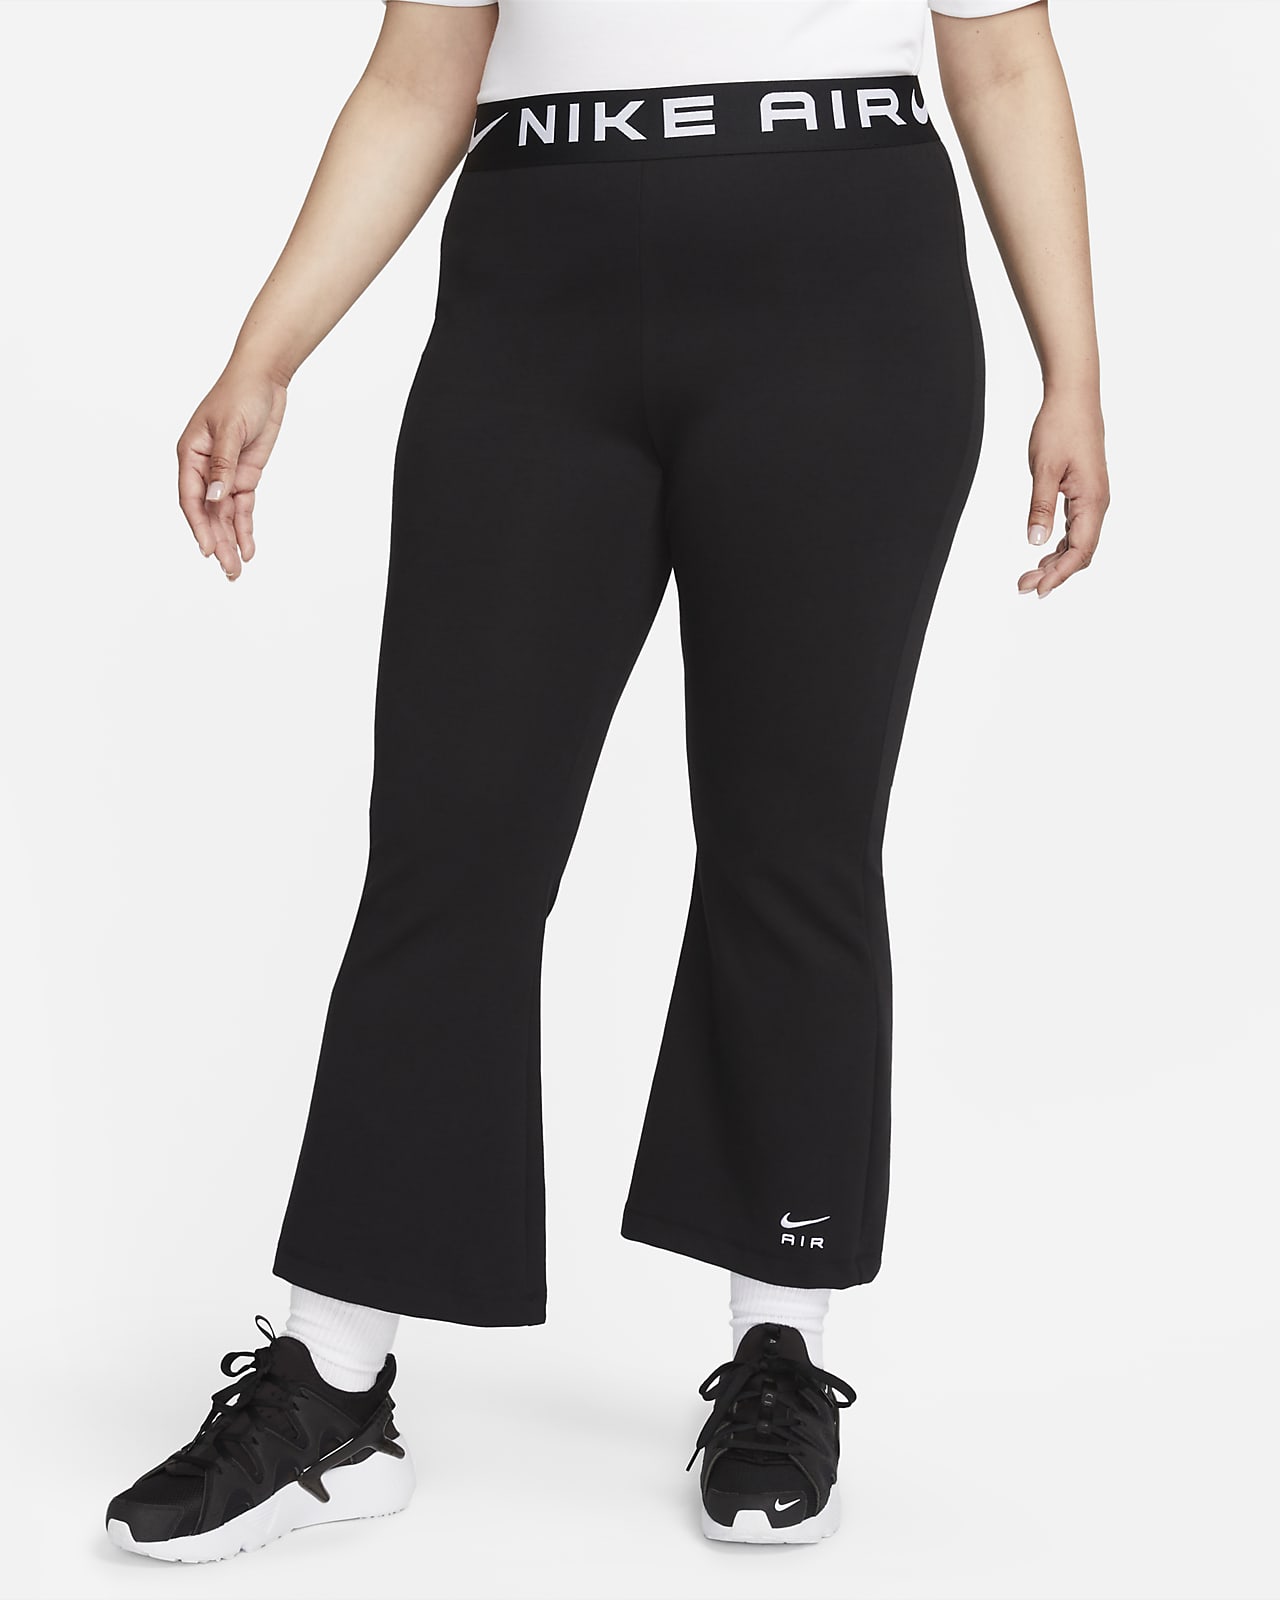 Nike Sportswear Air Women's High-Rise Leggings (Plus Size). Nike SI